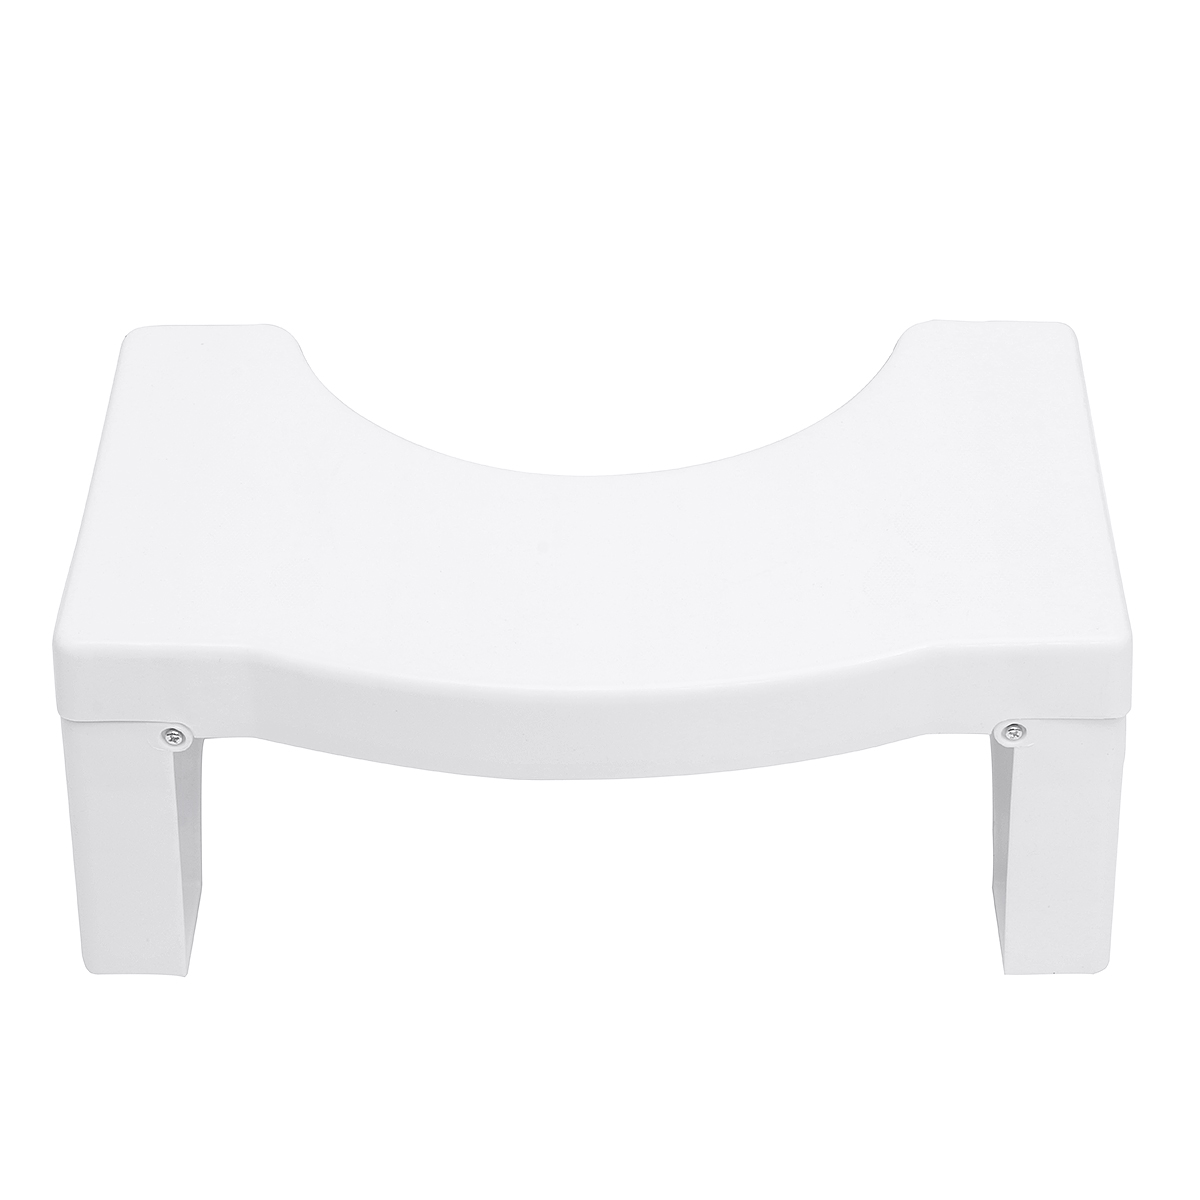 Foldable-Toilet-Stool-Potty-Chair-Plastic-Non-slip-Bathroom-White-Sit-Footstool-Decorations-1516575